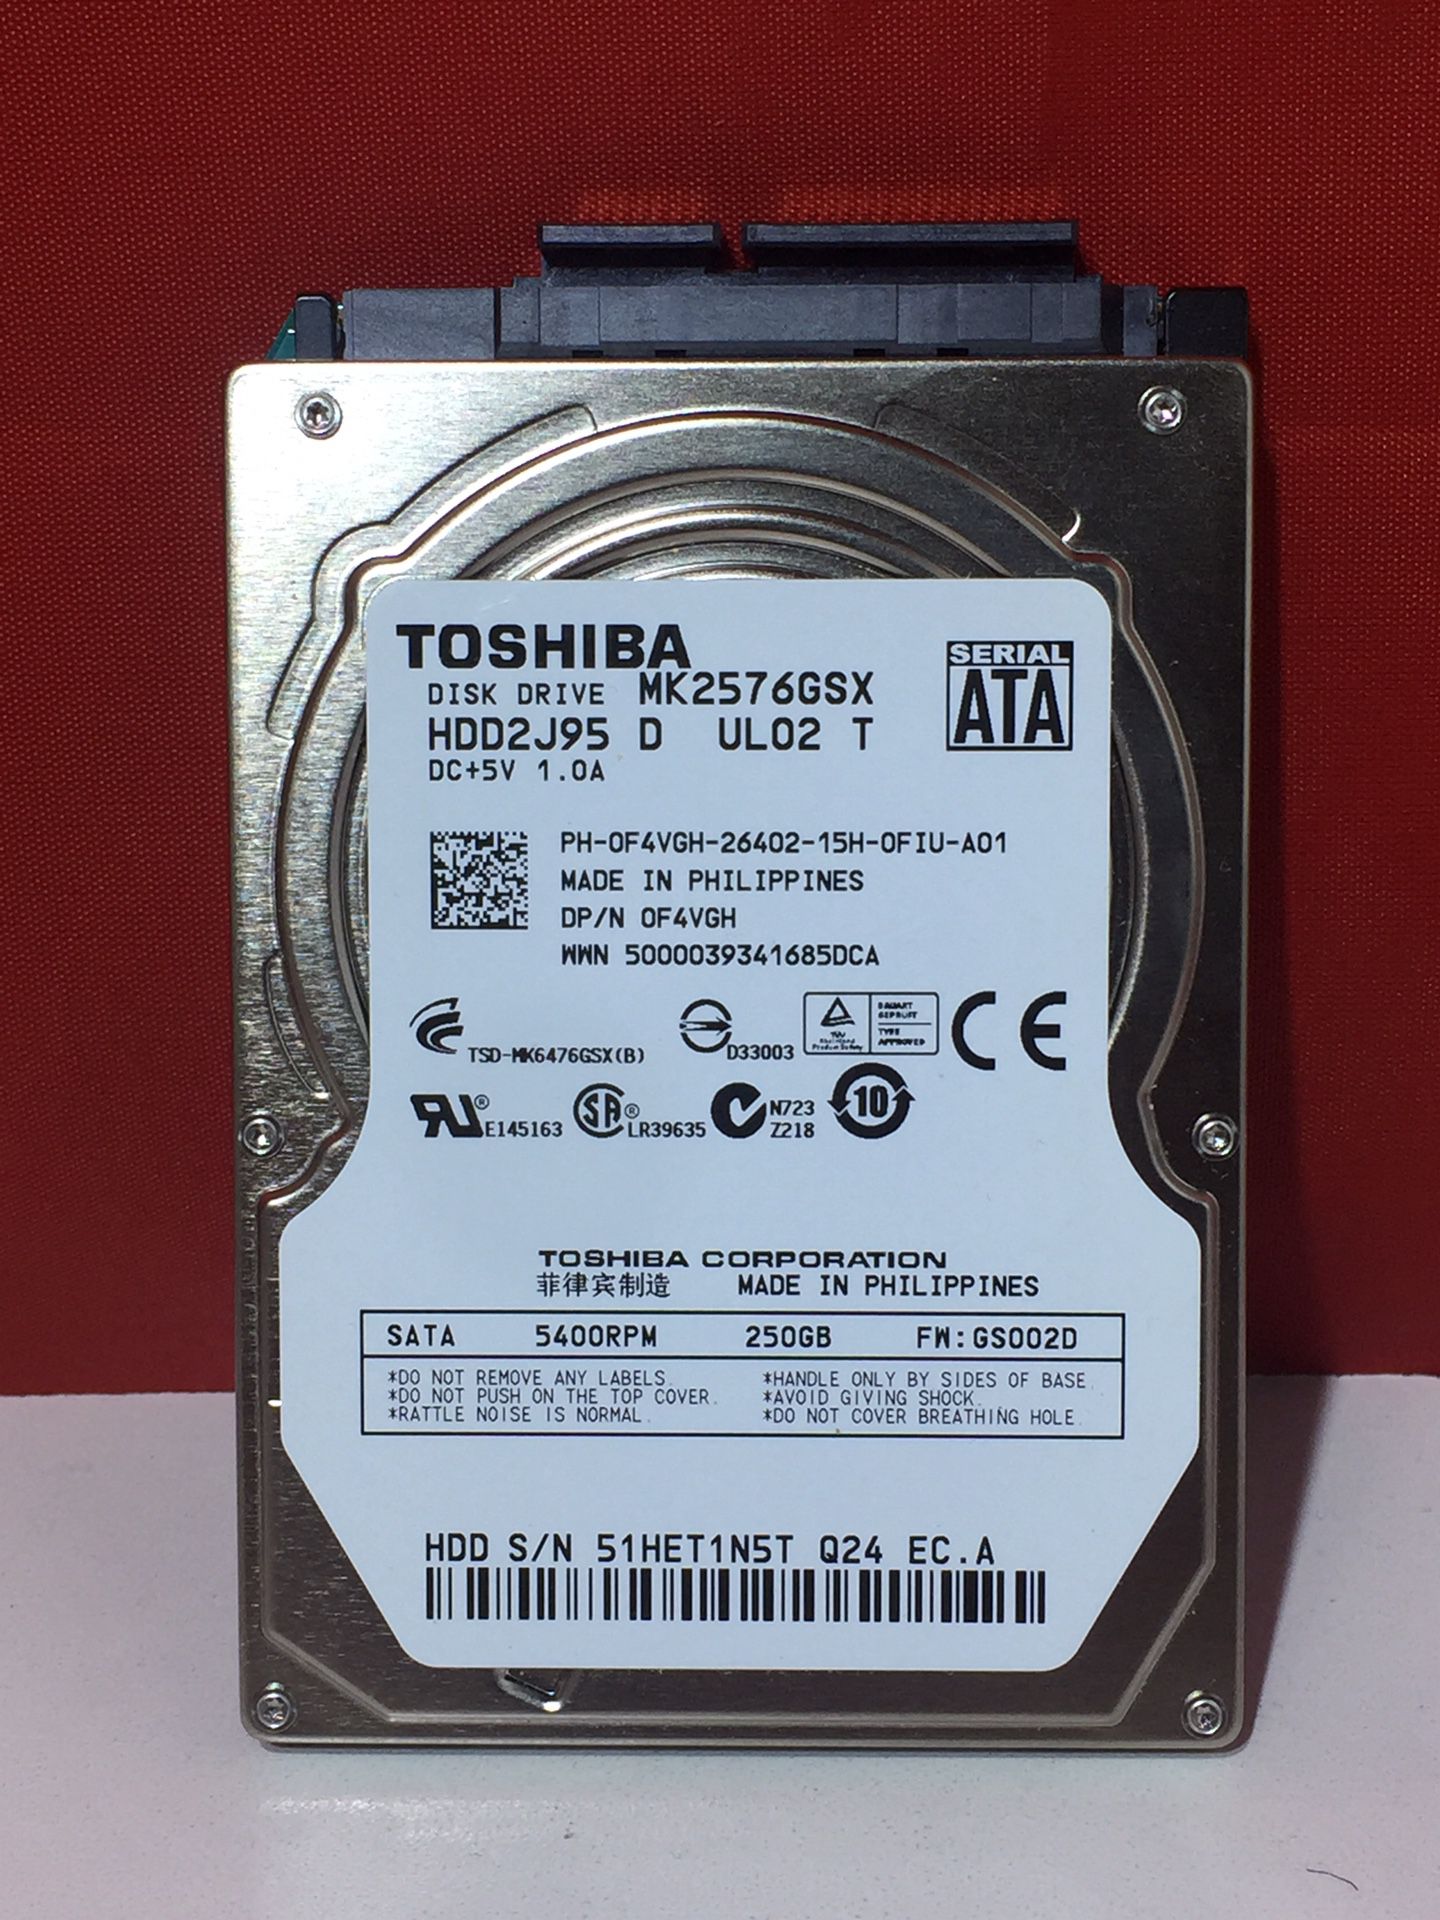 TOSHIBA CORPORATION 5400RPM 250GB SATA MK2576GSX Laptop Hard Drive